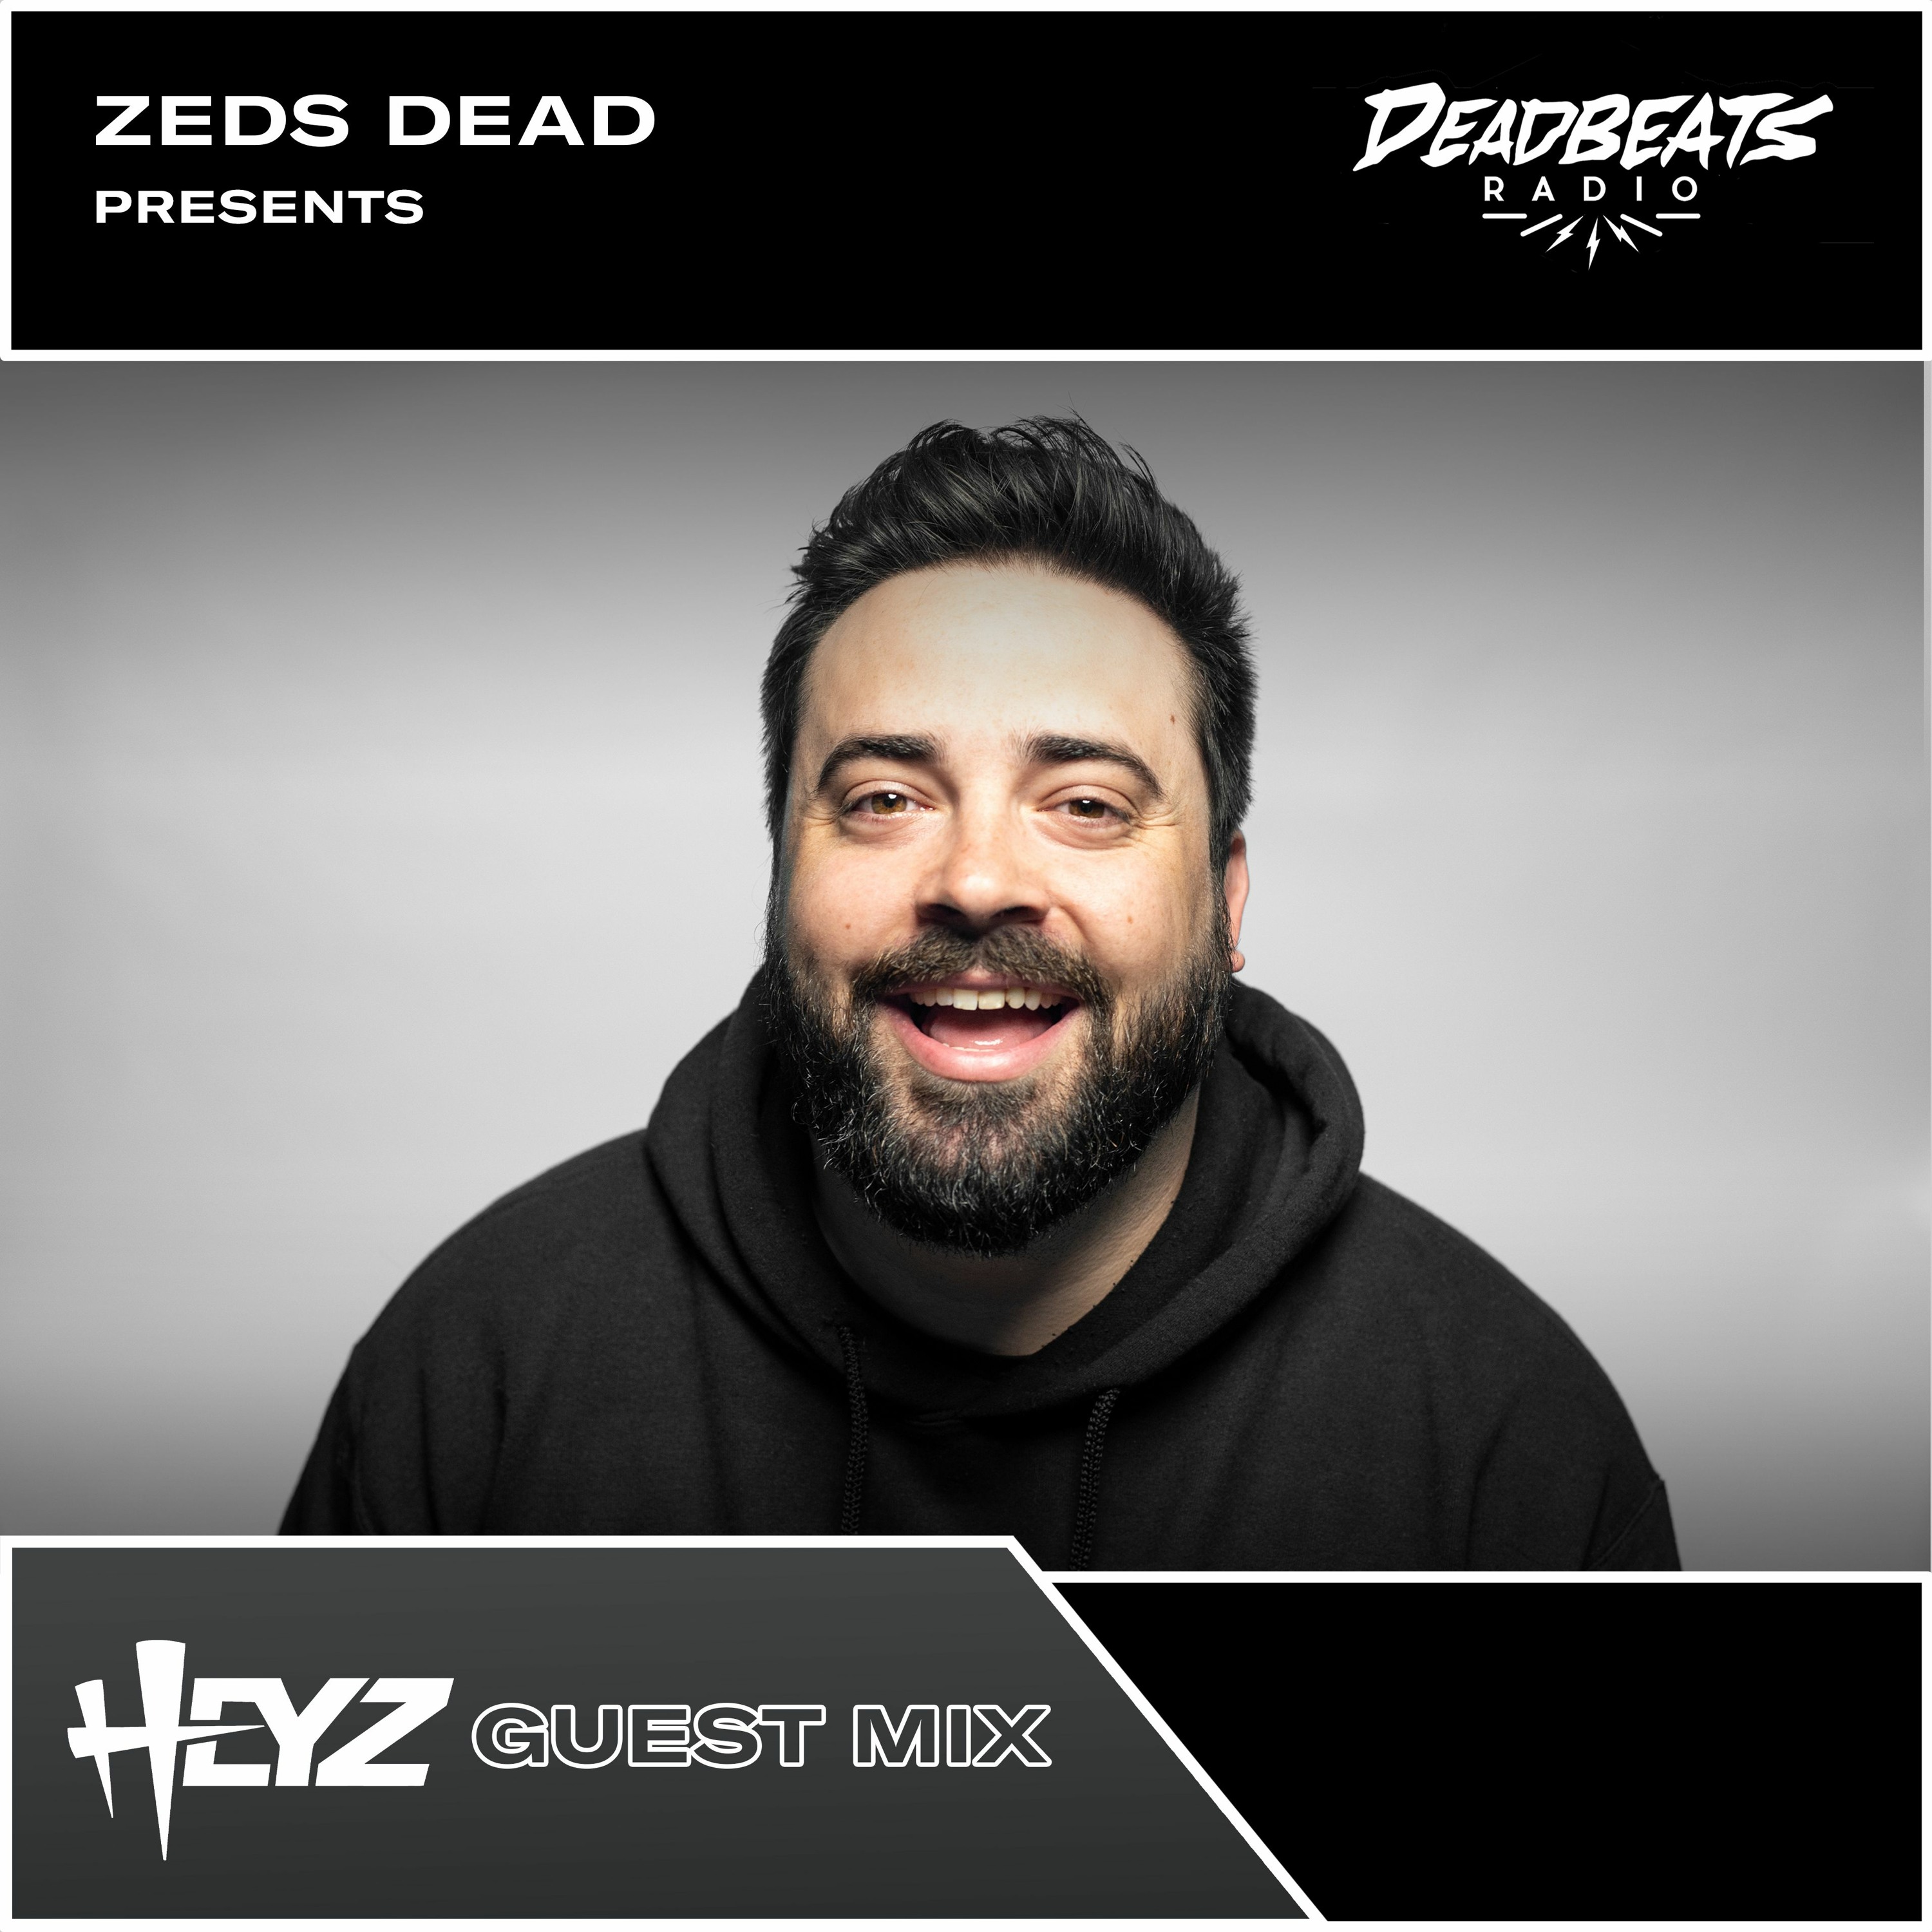 #201 Deadbeats Radio with Zeds Dead // HEYZ Guest Mix